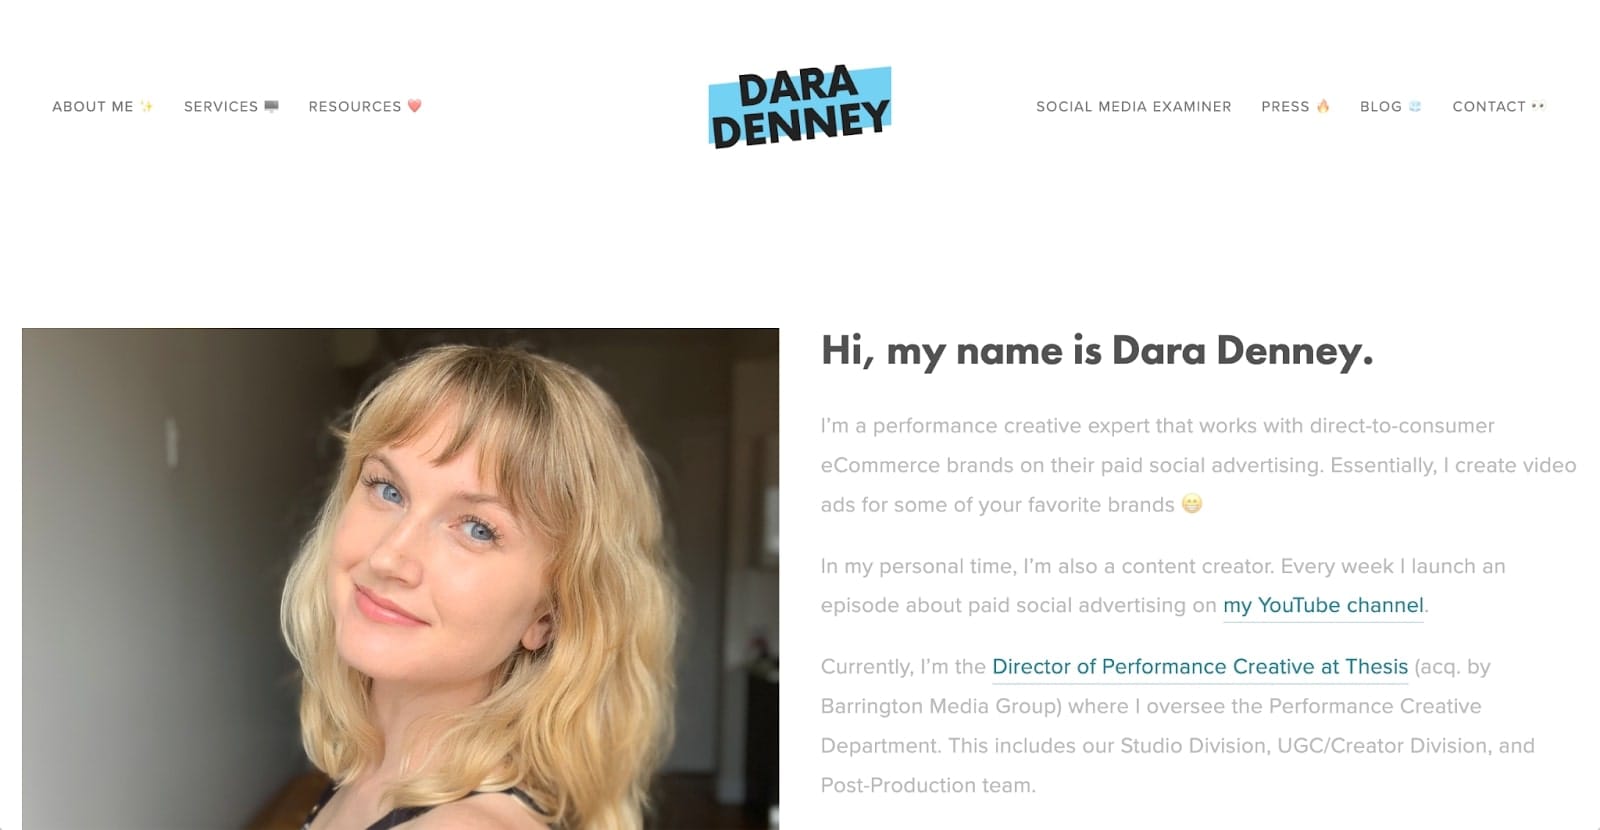 Dara Denney's website